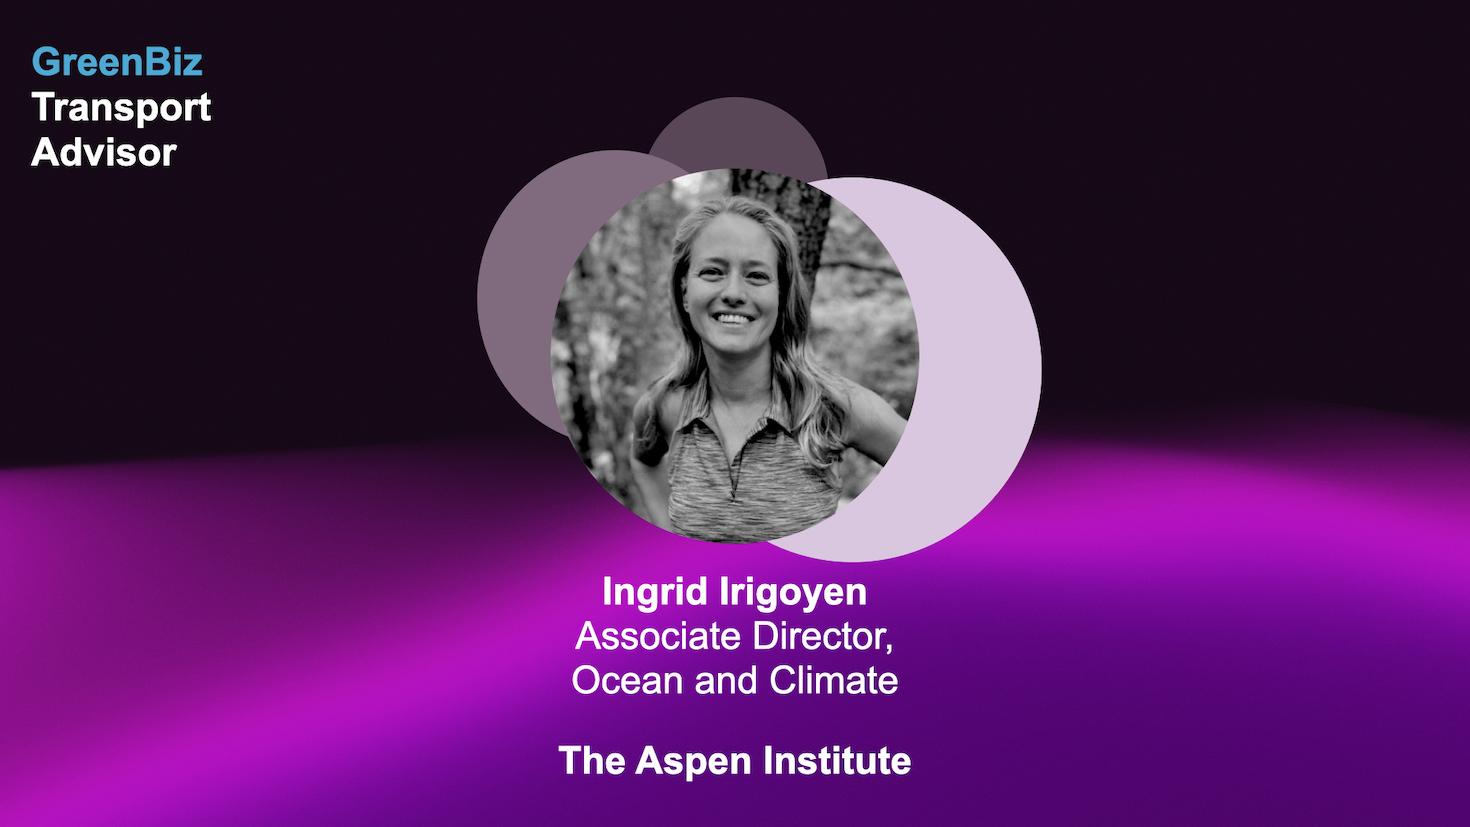 Ingrid Irigoyen of the Aspen Institute